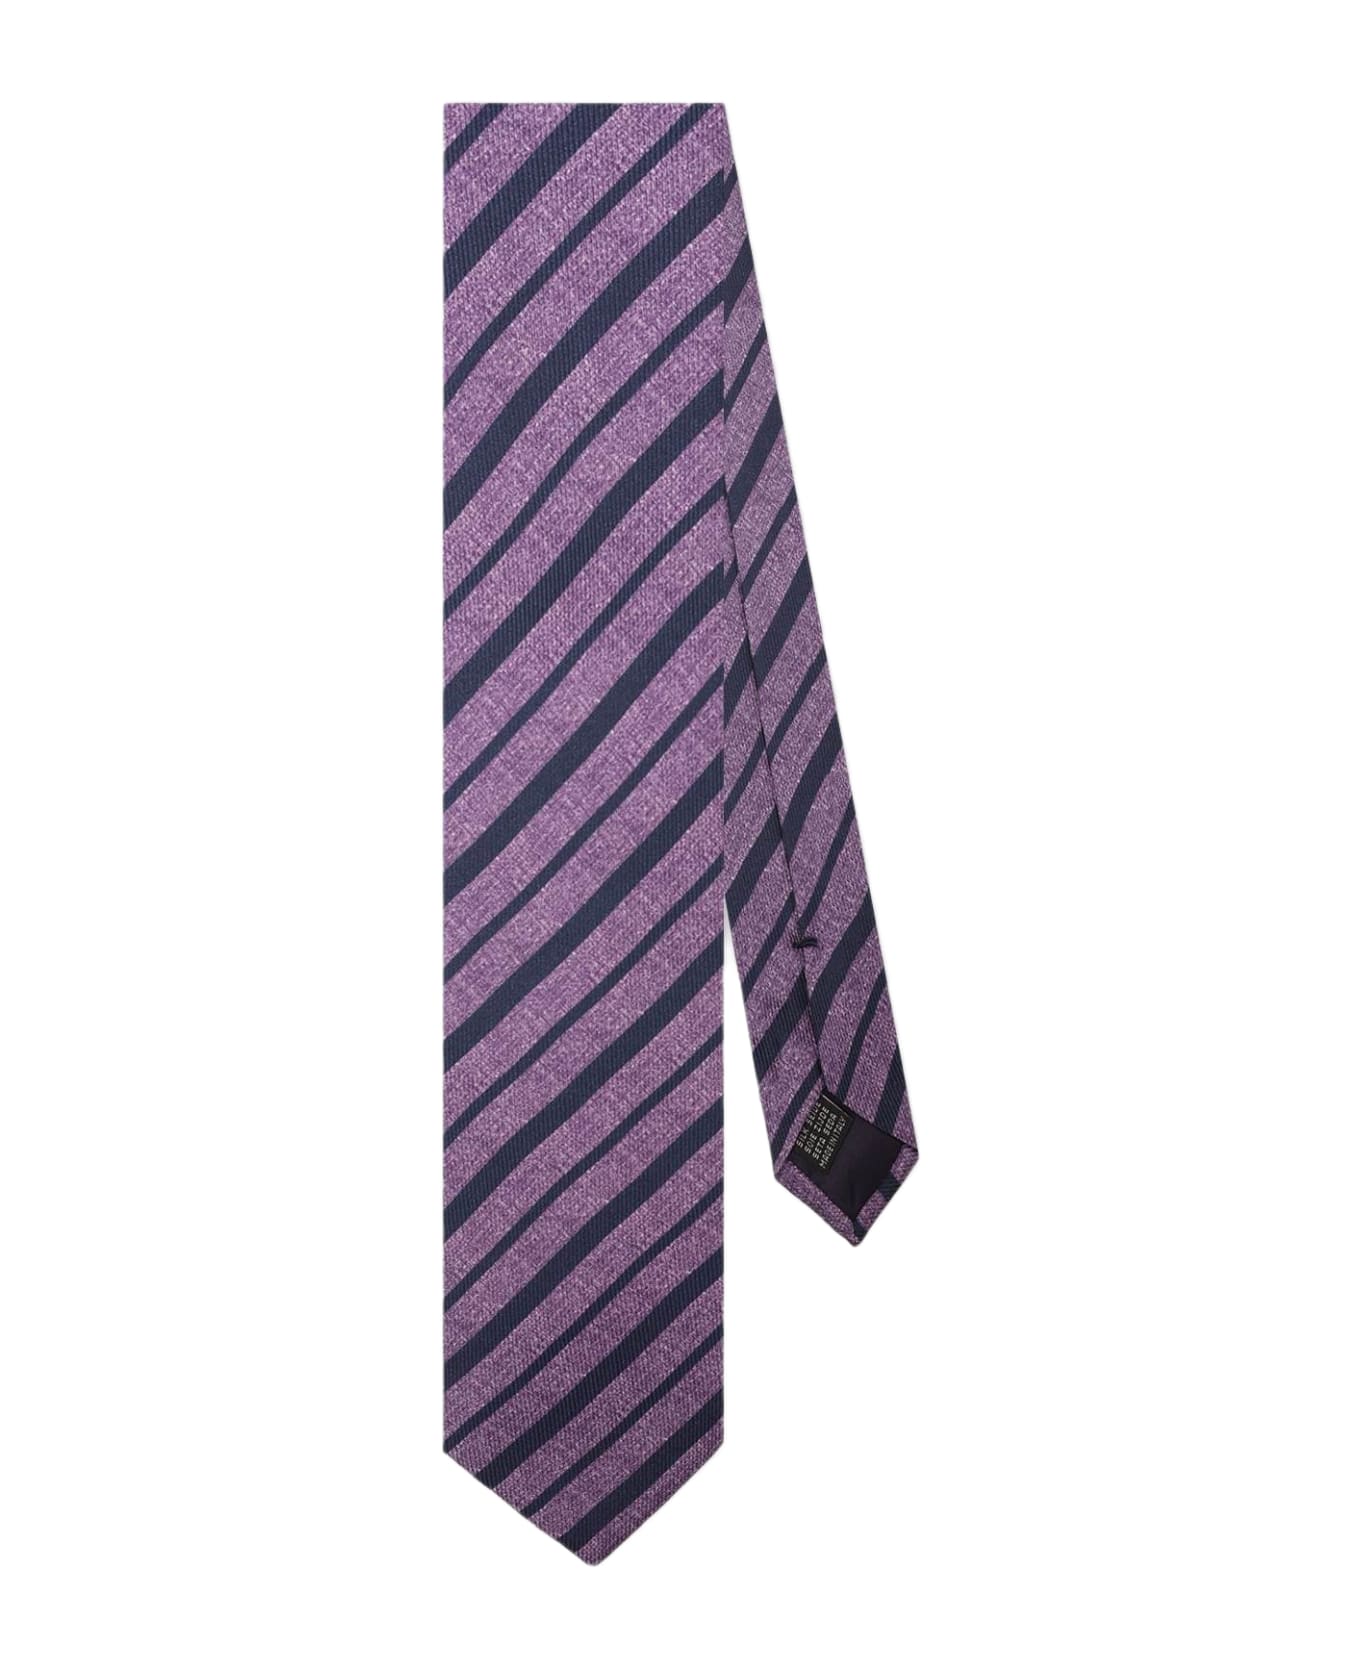 Larusmiani Regimental Tie Tie - Purple